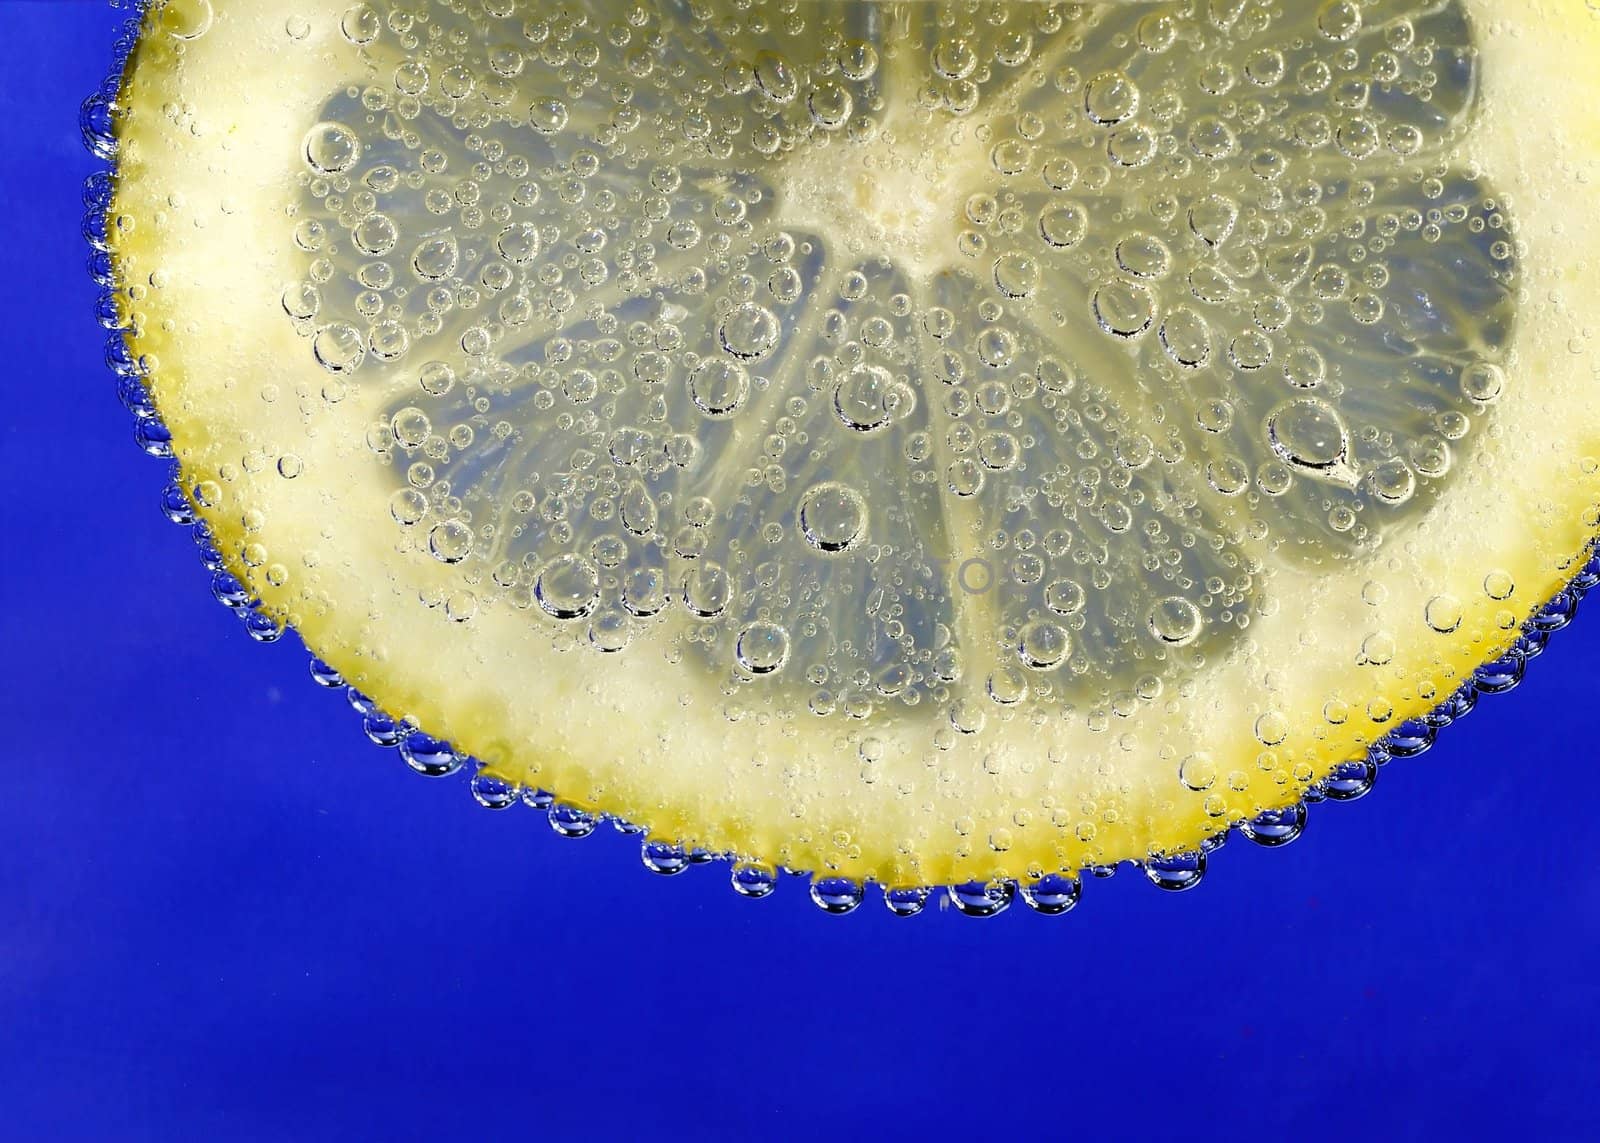 Lemon macro with bubbles by neelsky